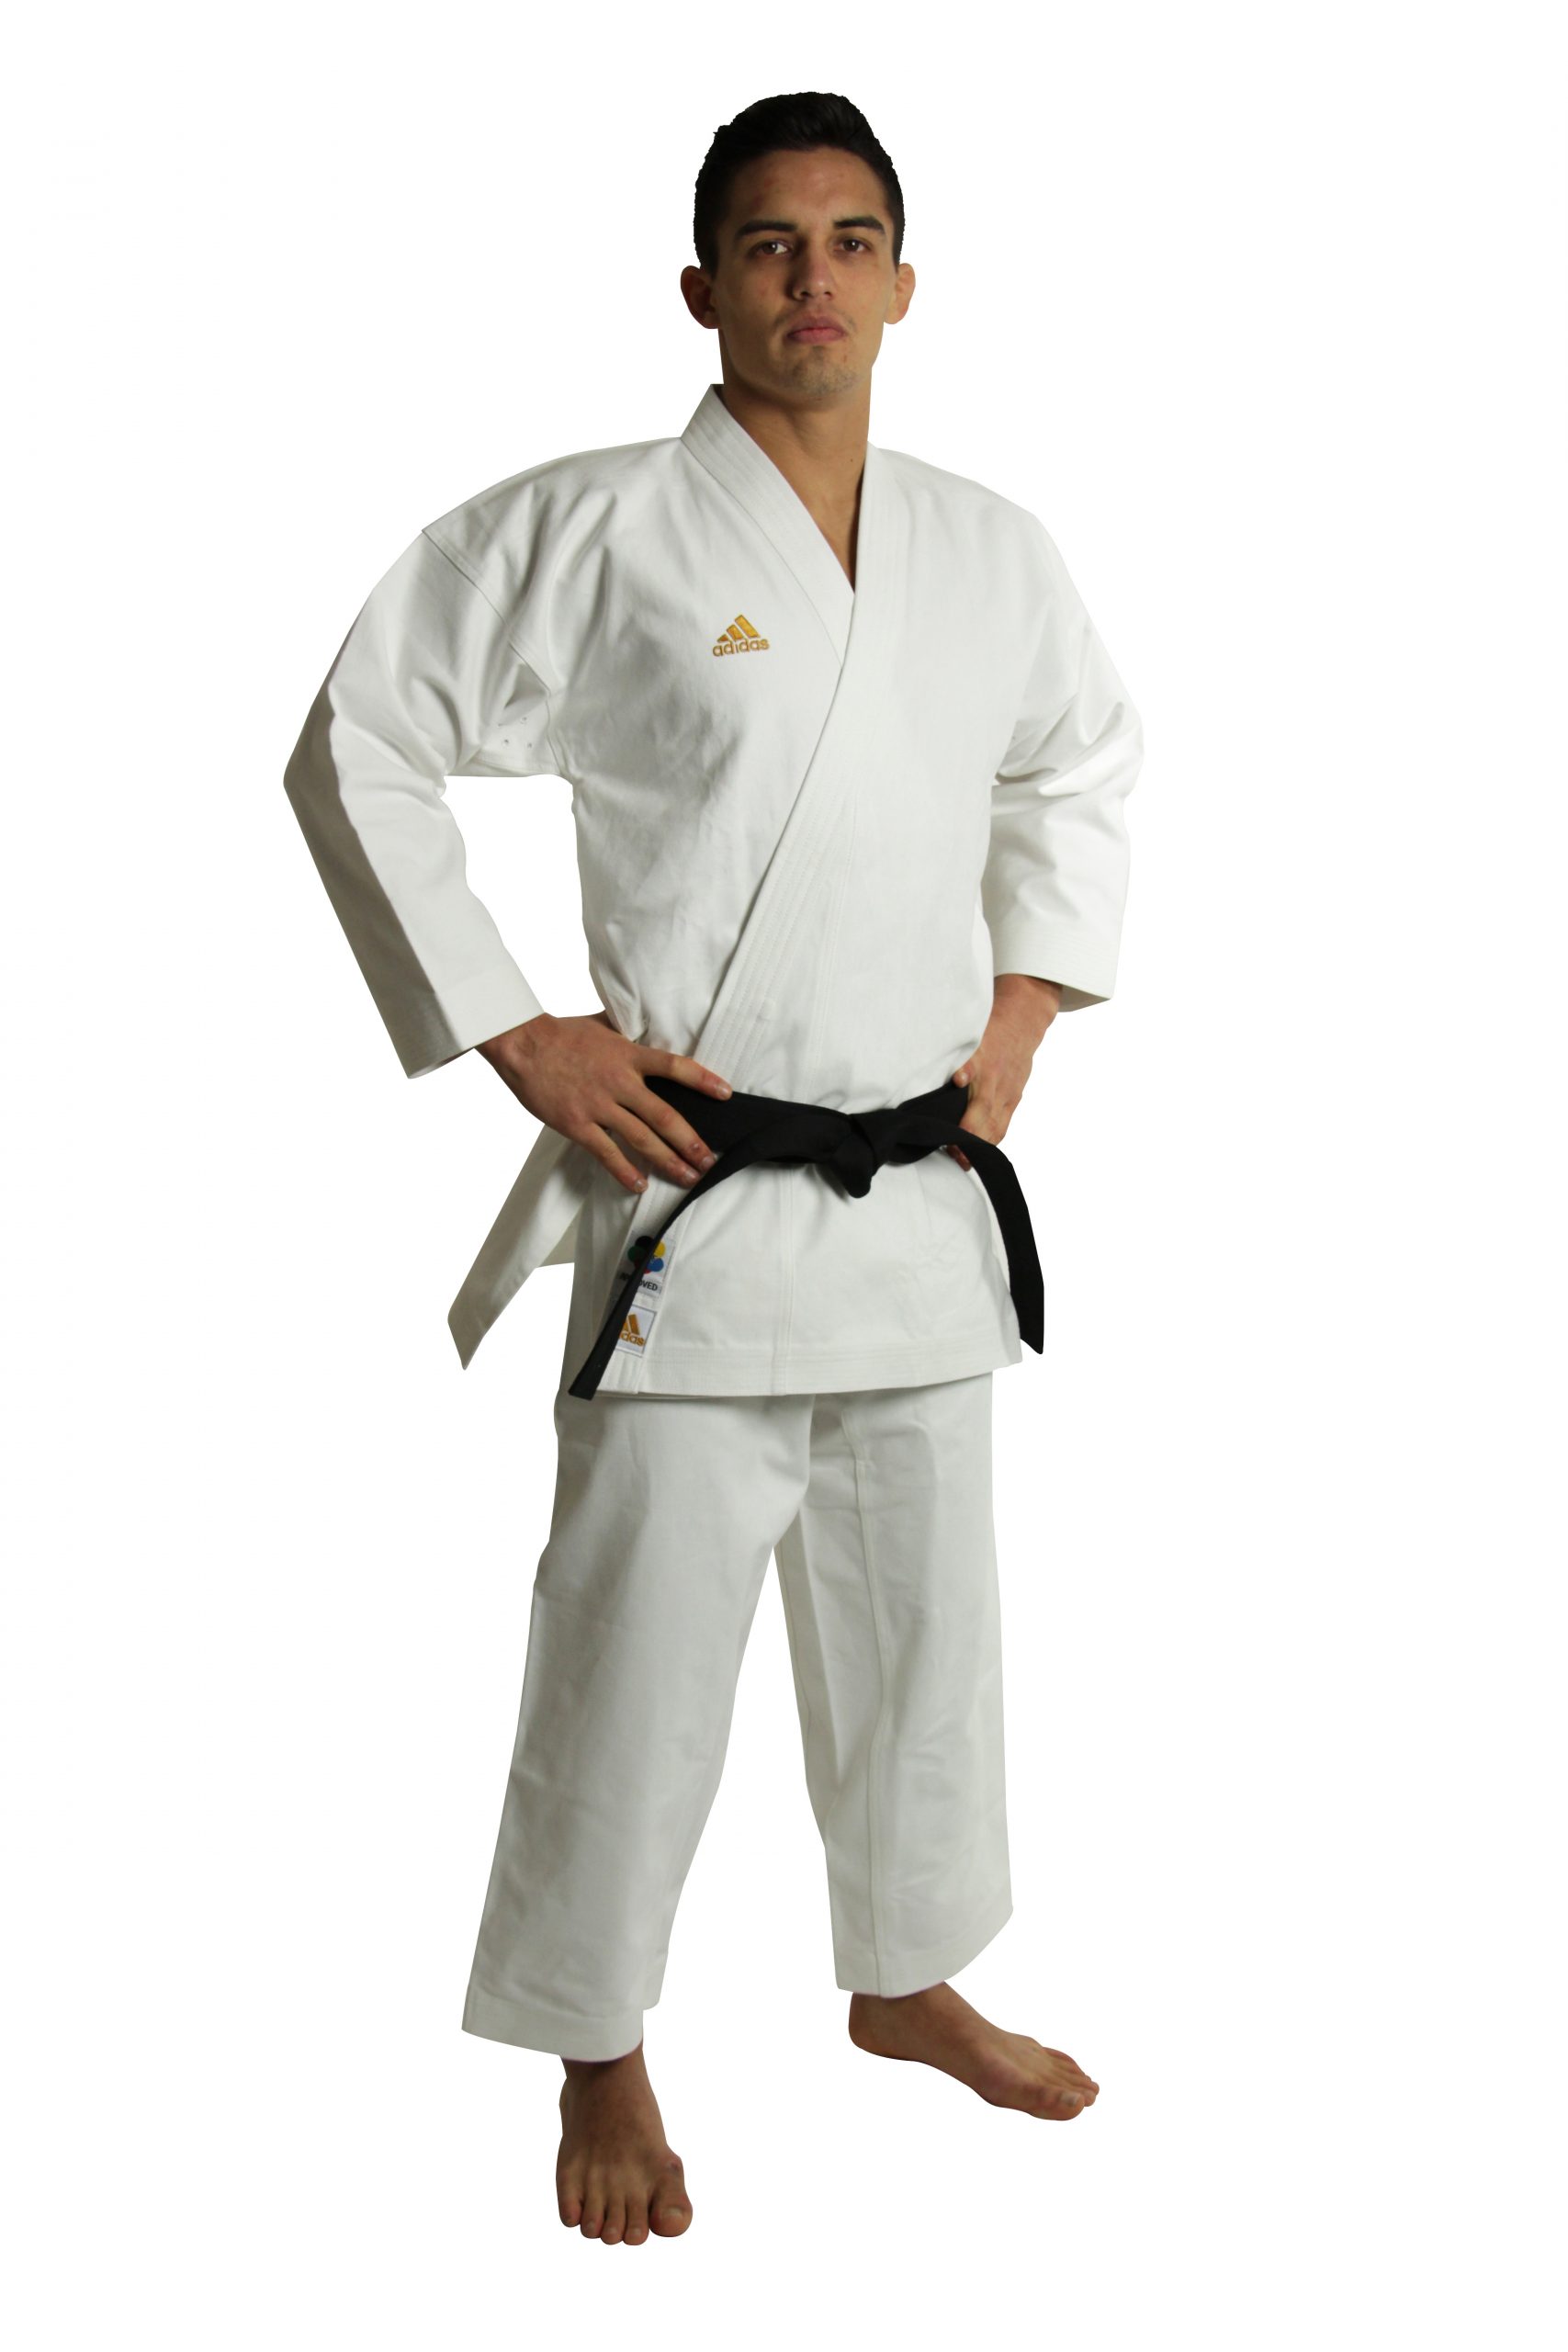 Karategi Adidas CHAMPION JAPANESE - Indumentaria para marciales